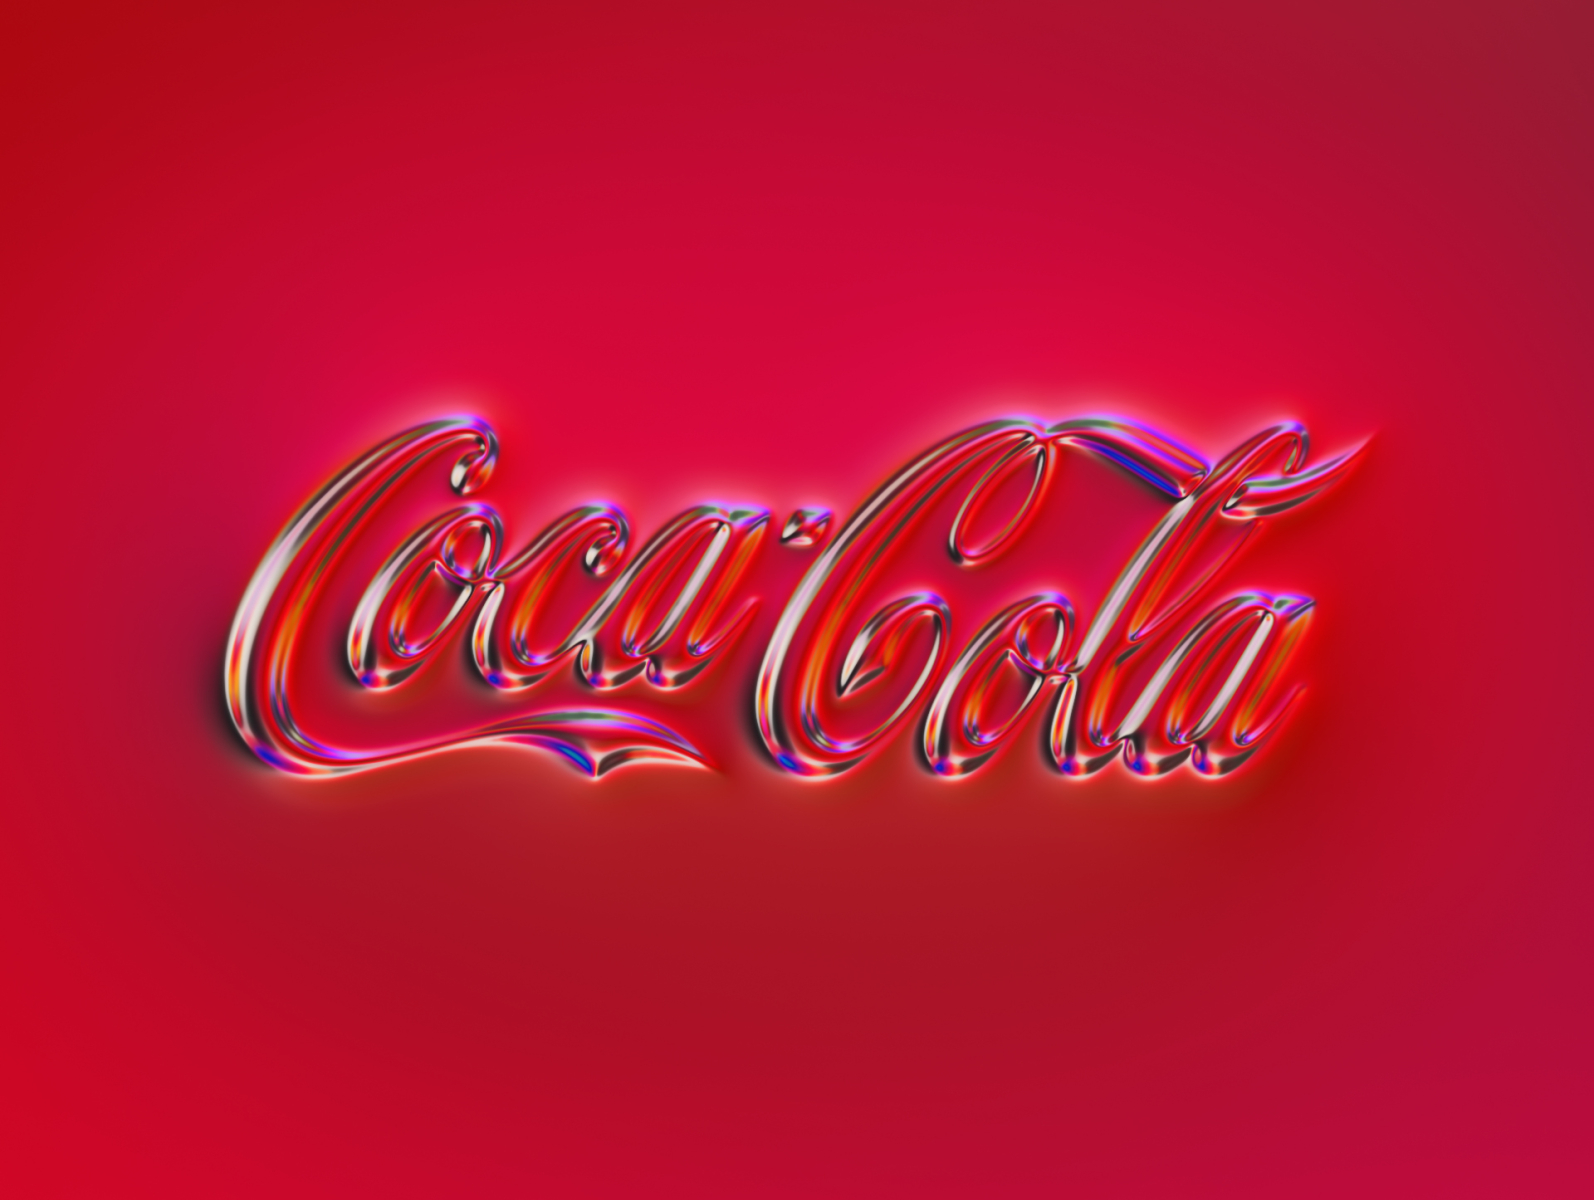 36 logos - Coca Cola red rebranding rebrand logodesign coke cocacola logotype logo design logo branding 36daysoftype typography illustration colors generative filter forge abstract art design